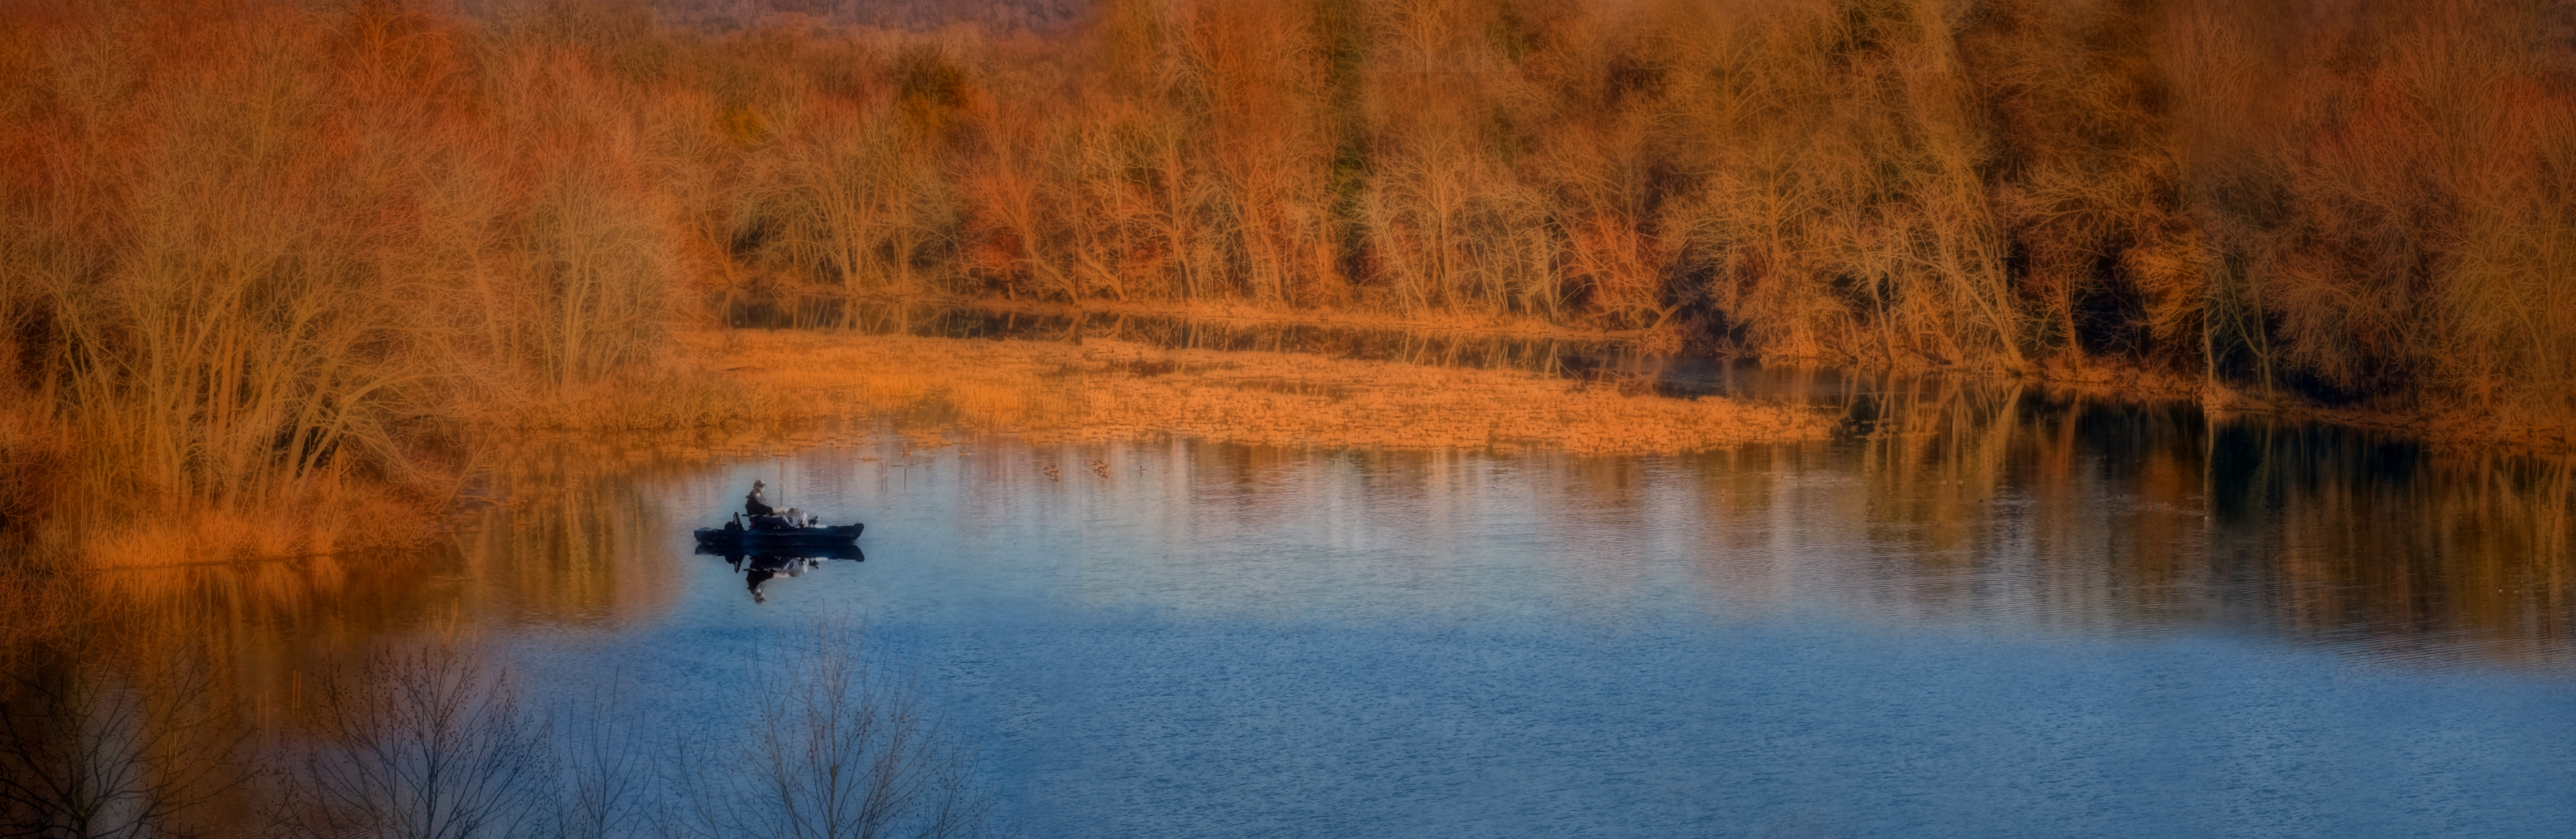 Wallpaper Landscape Lake Water Nature Reflection Sky Calm